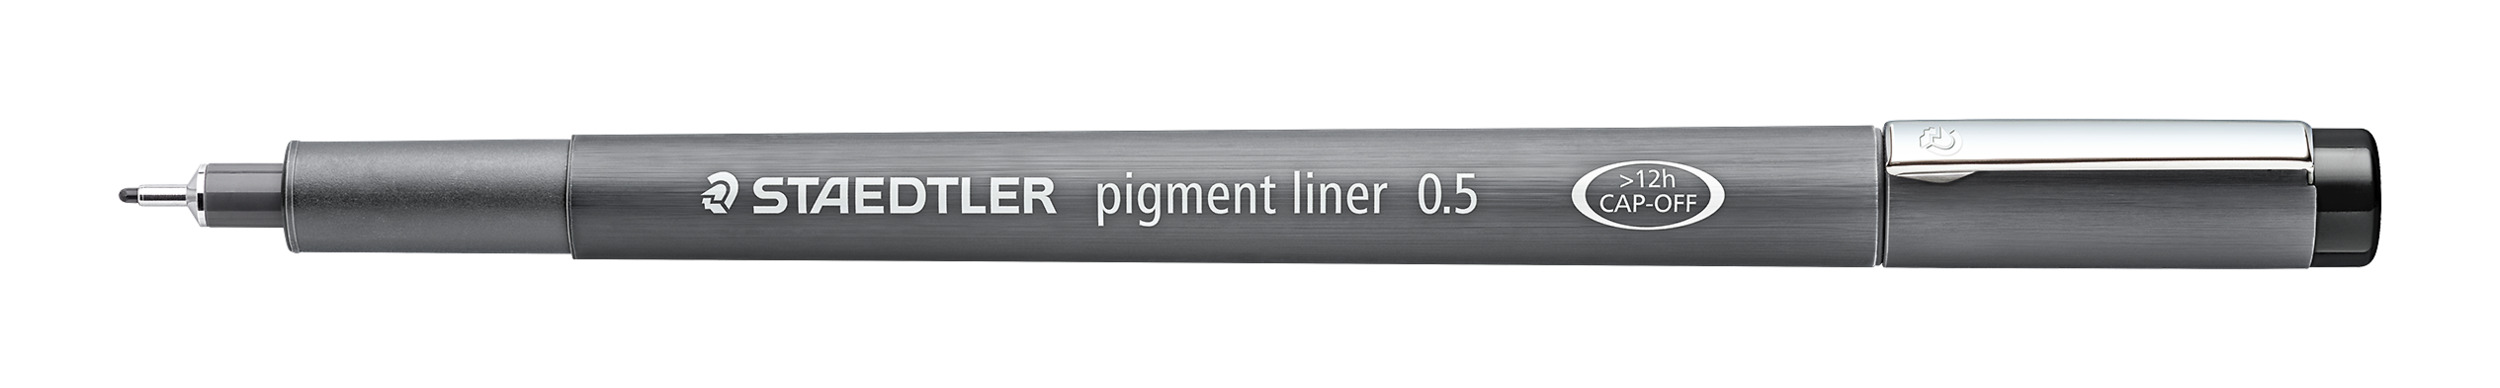 Pigment liner 0.5mm